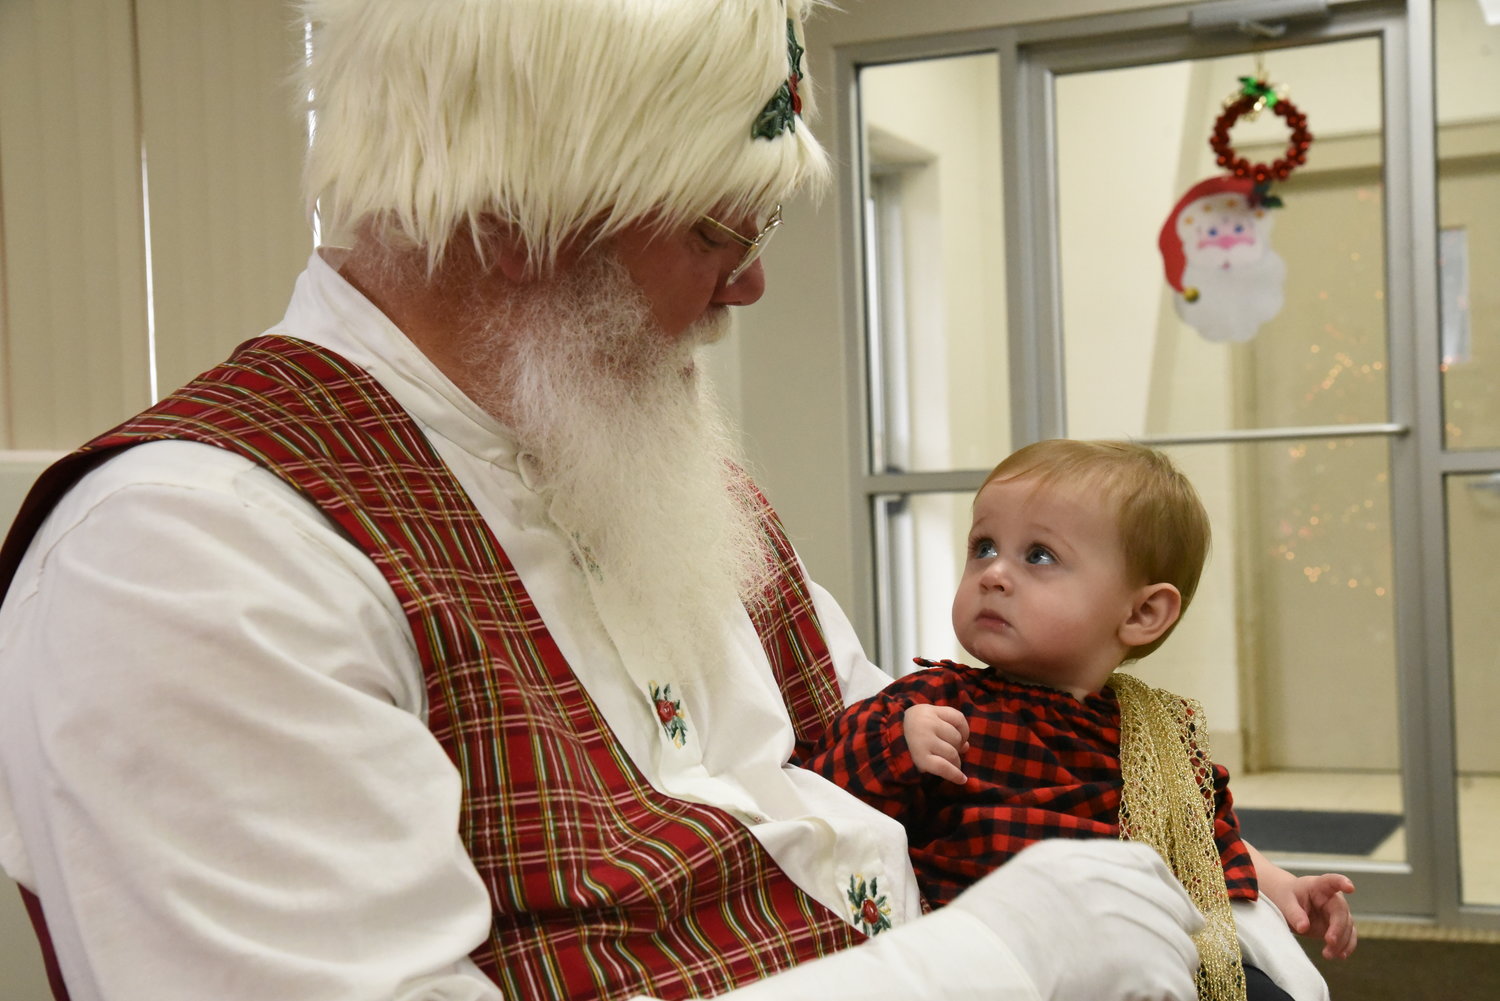 Eleven-month-old Ellie Kiene looks skeptical as she meets Santa at the Riverside fire station on Dec. 14.